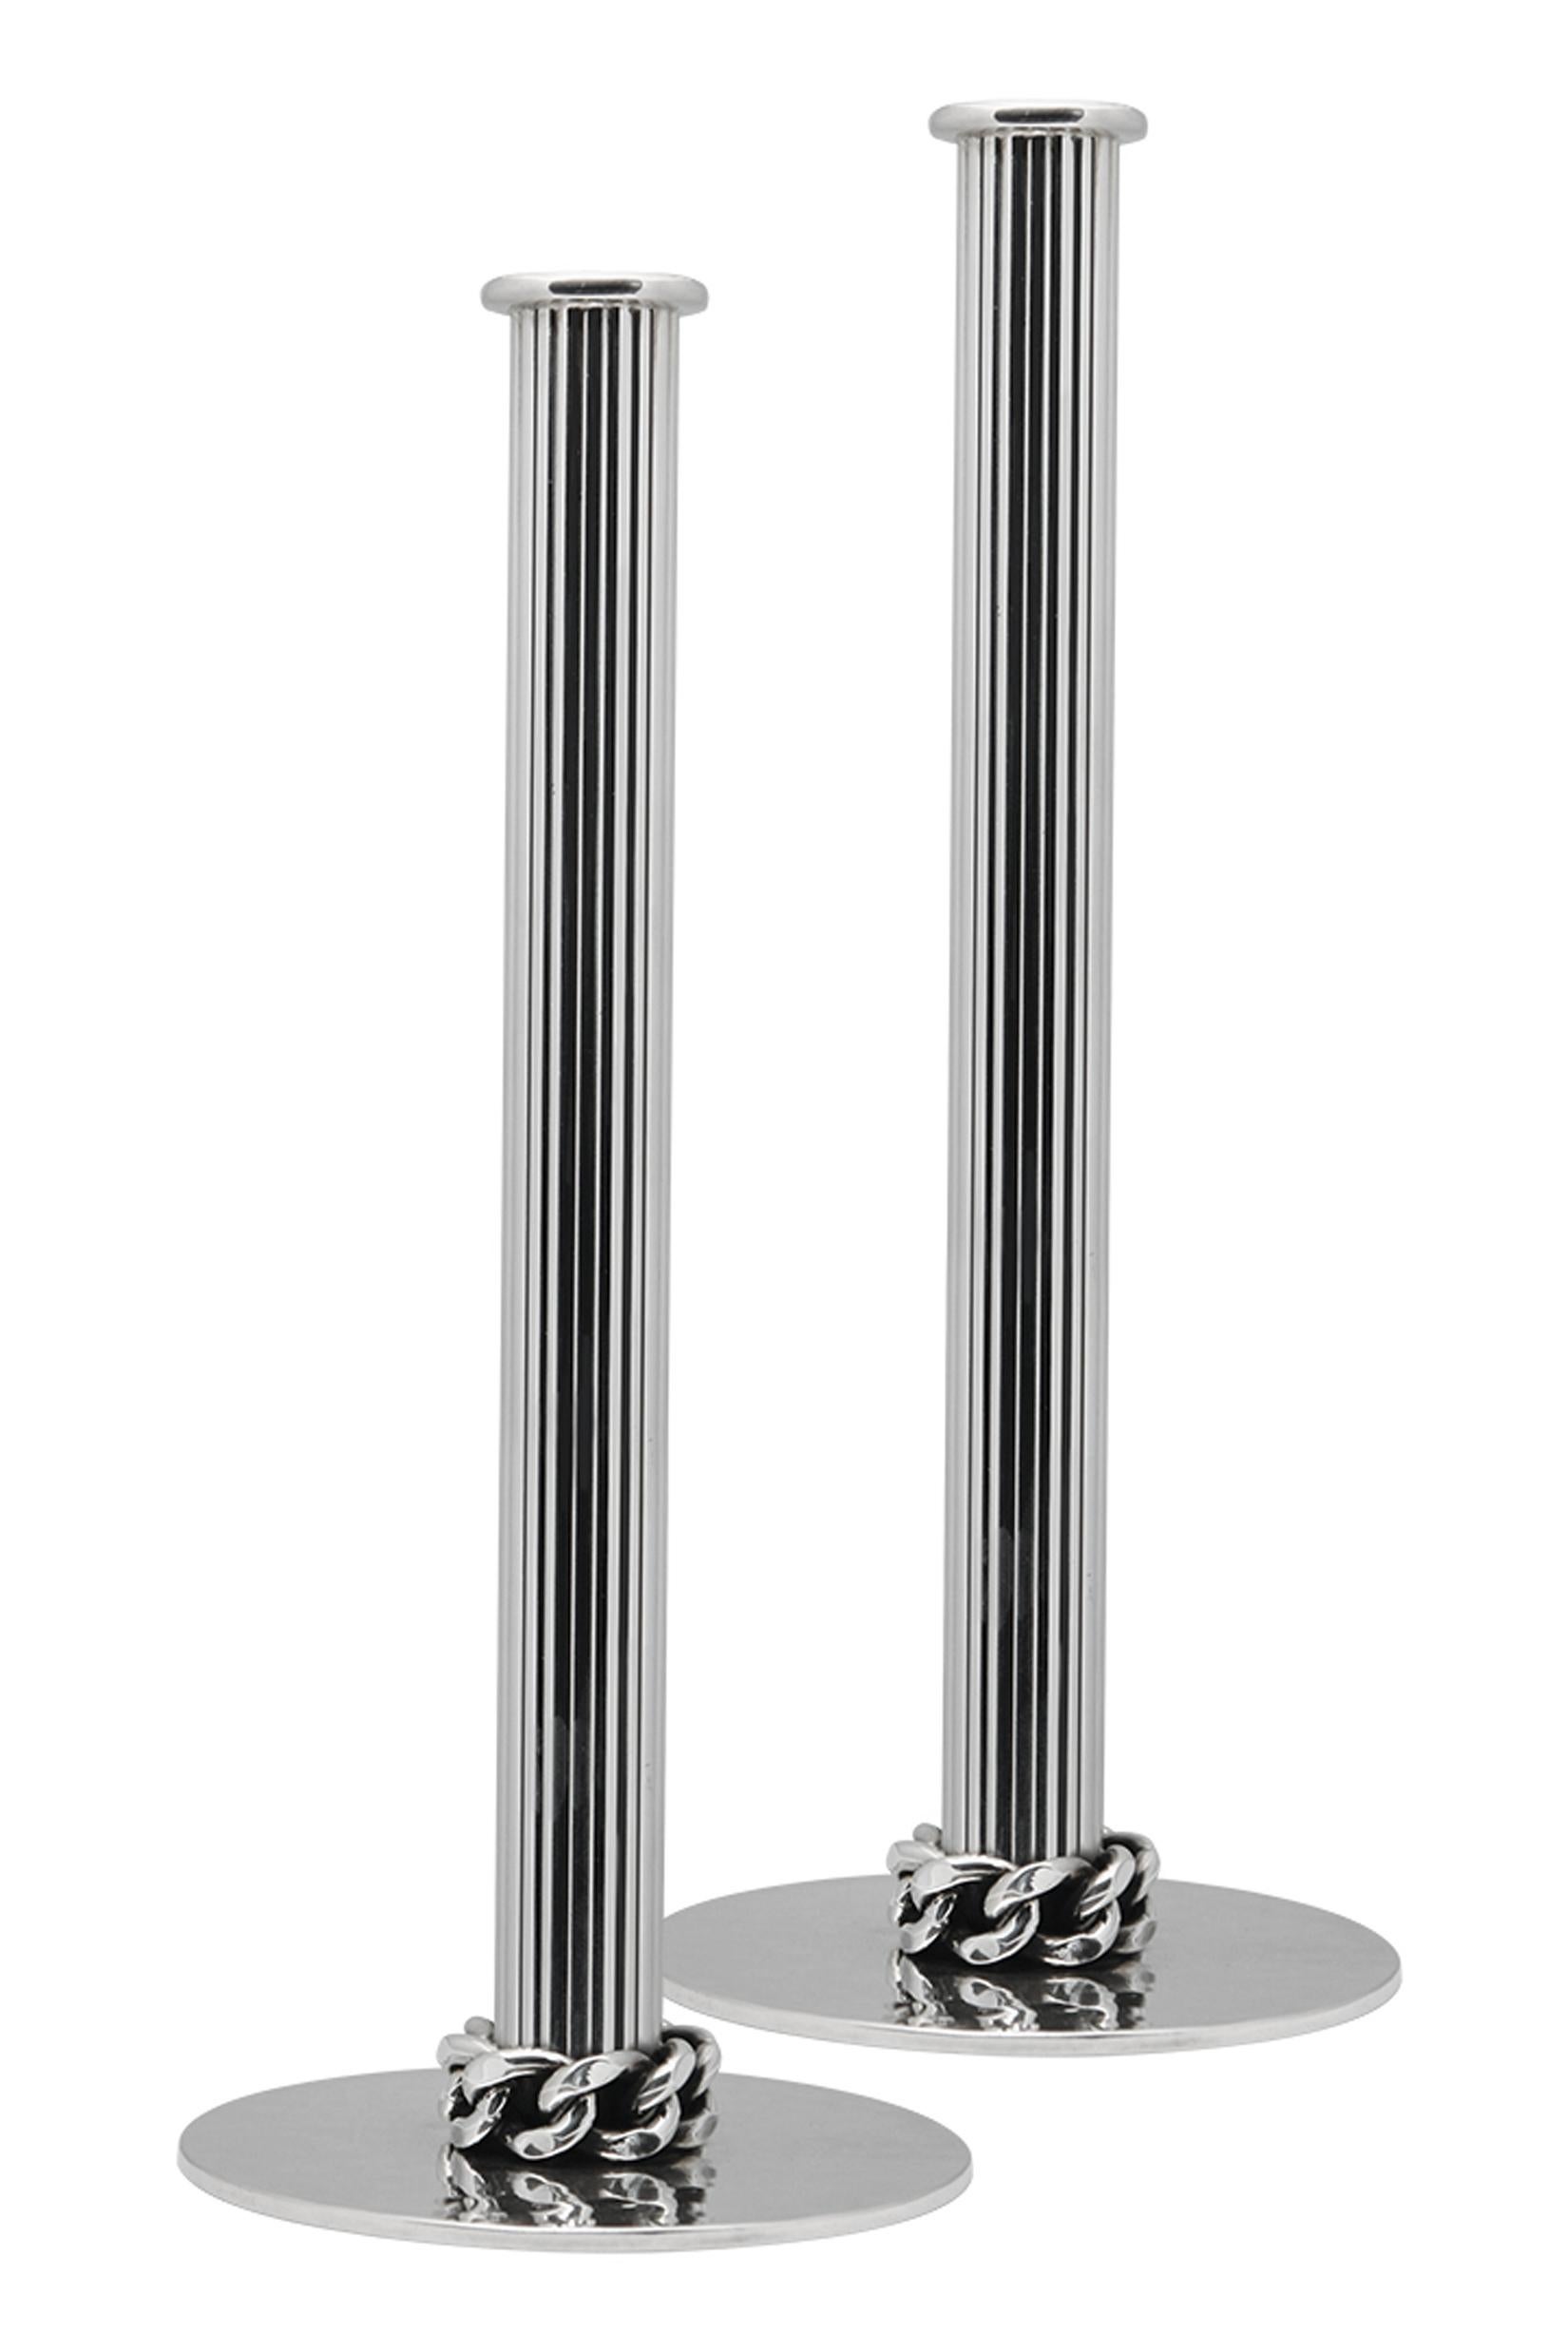 Jean Després pair of silvered metal candlesticks, signed J.Després, circa 1950. Each on flat base with hammered finish, iconic Després large curb link surround, columnar fluted stems. Measures: Height 24 cm.